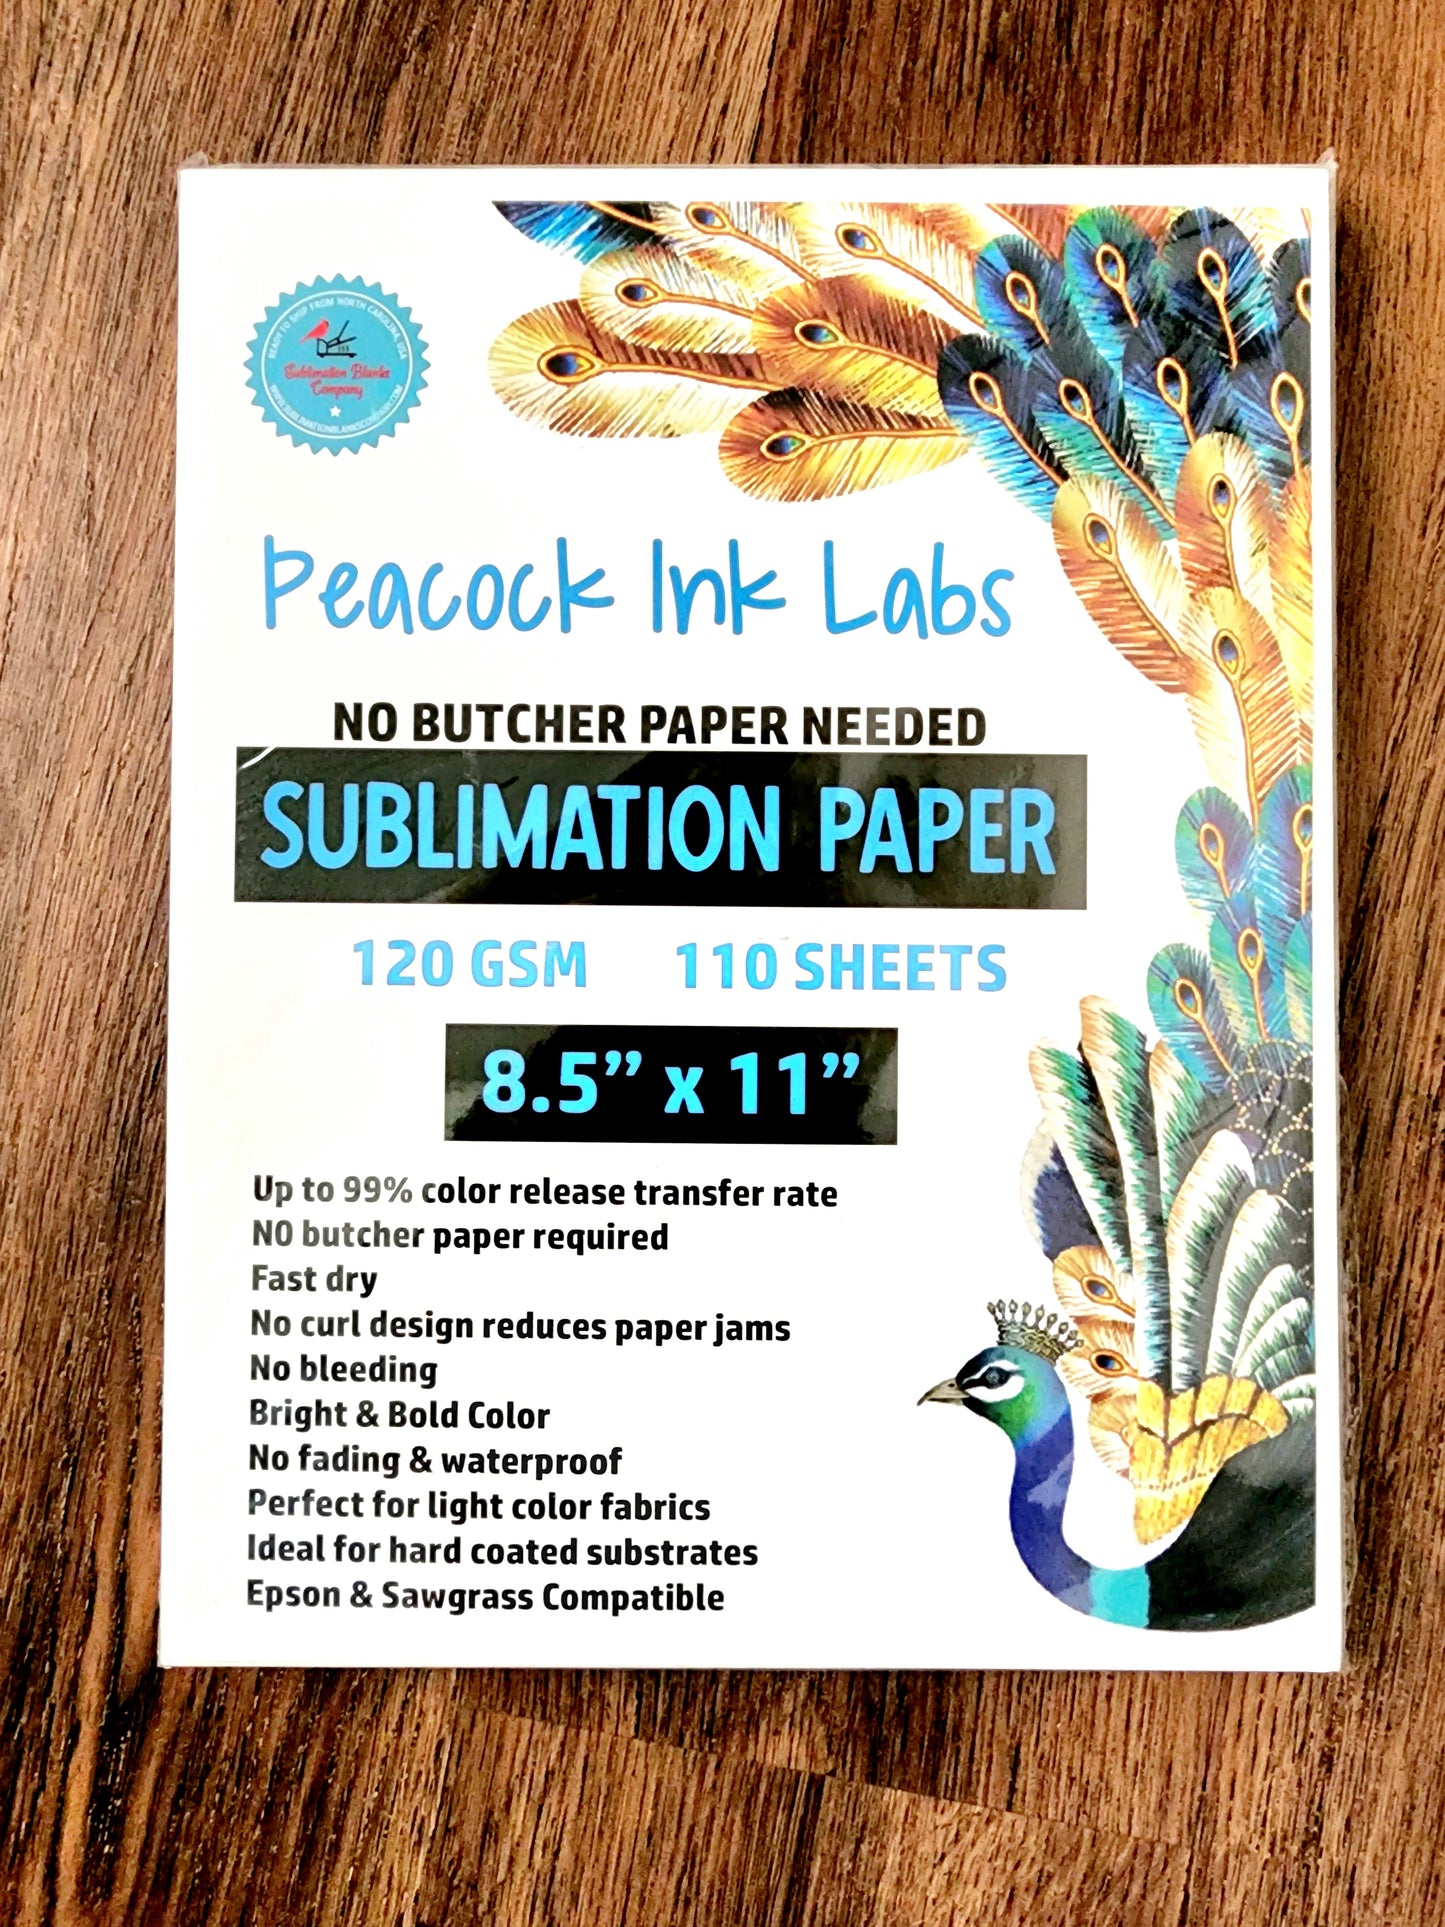 8.5x11" No Butcher Paper Sublimation Paper. 120 gsm. 110 Sheet Pack!